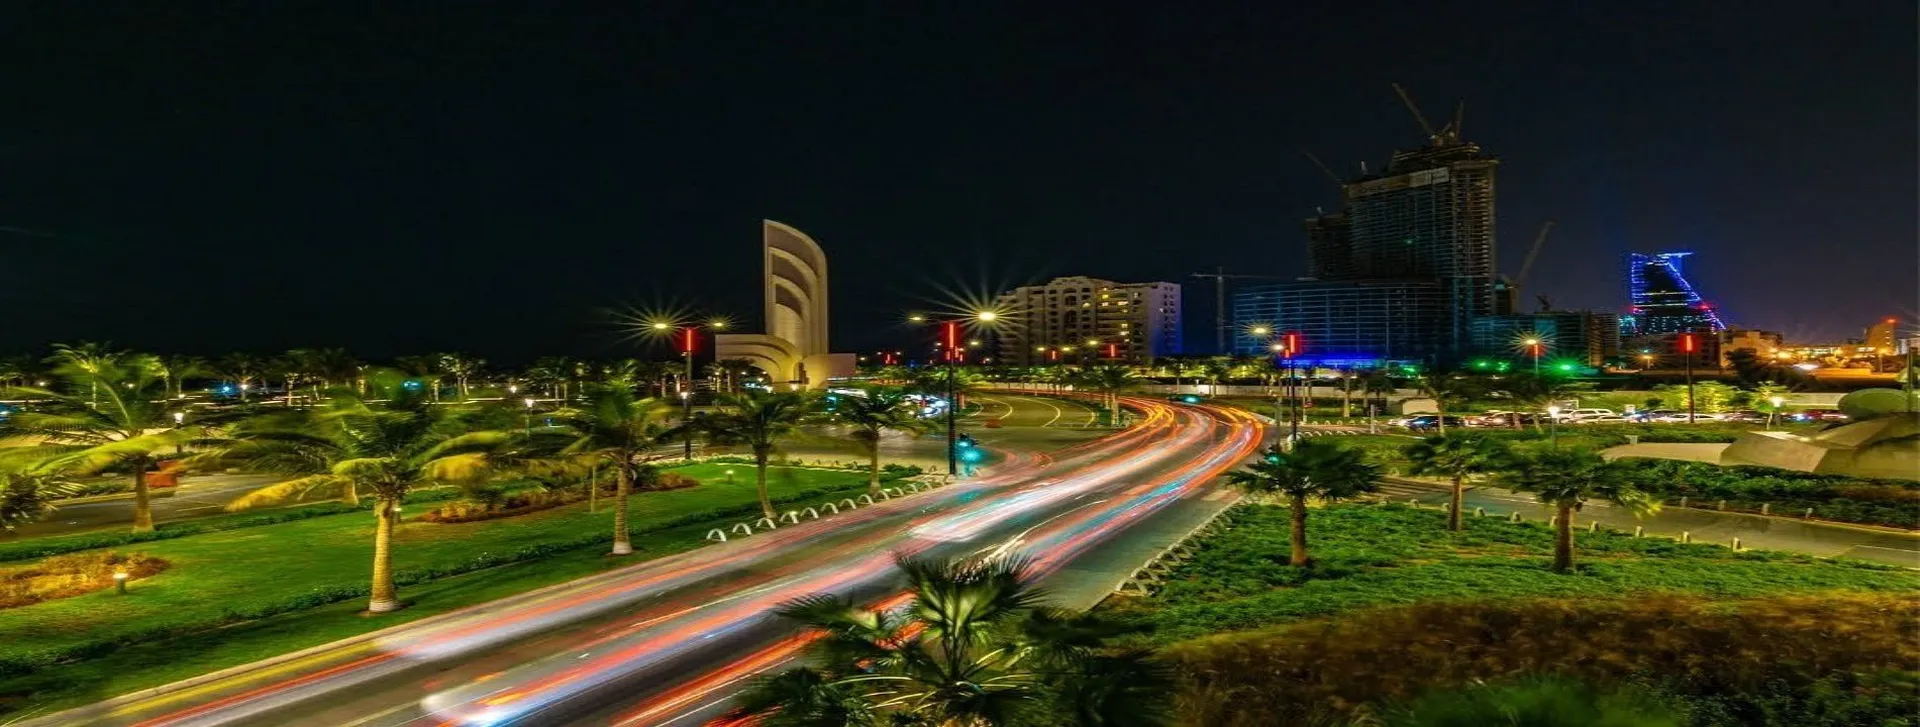 Jeddah Water Front Park